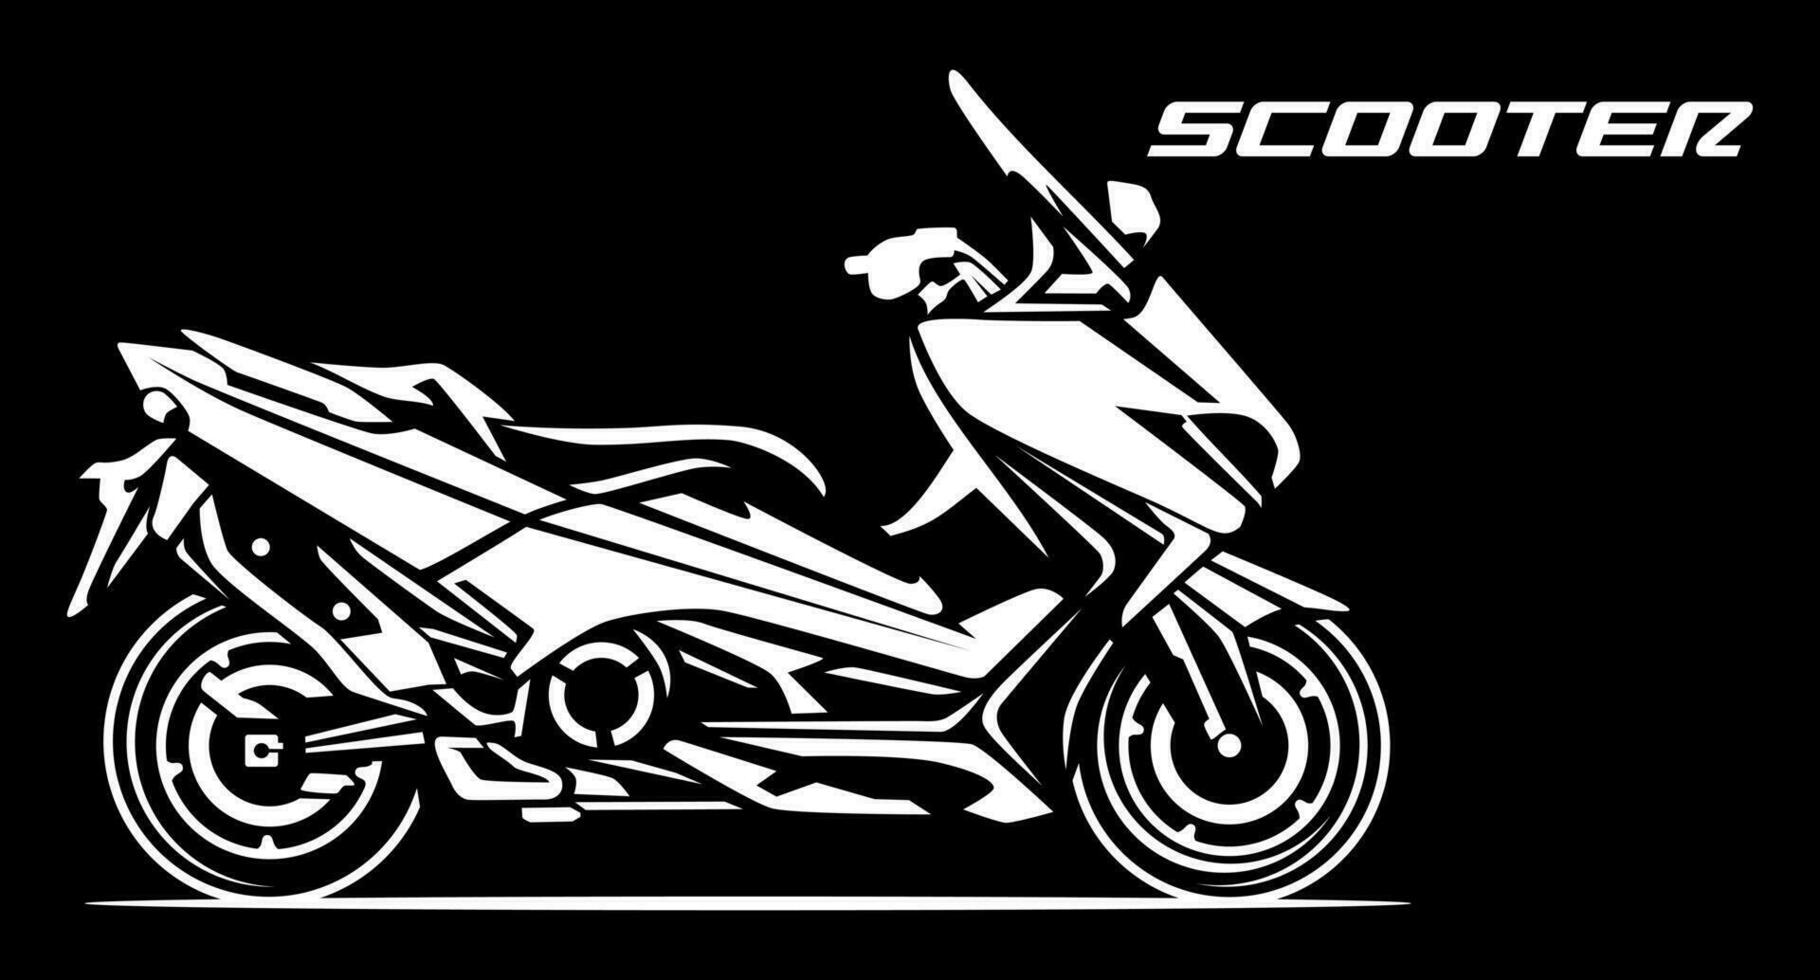 Dynamic Motorbike Illustration design vector